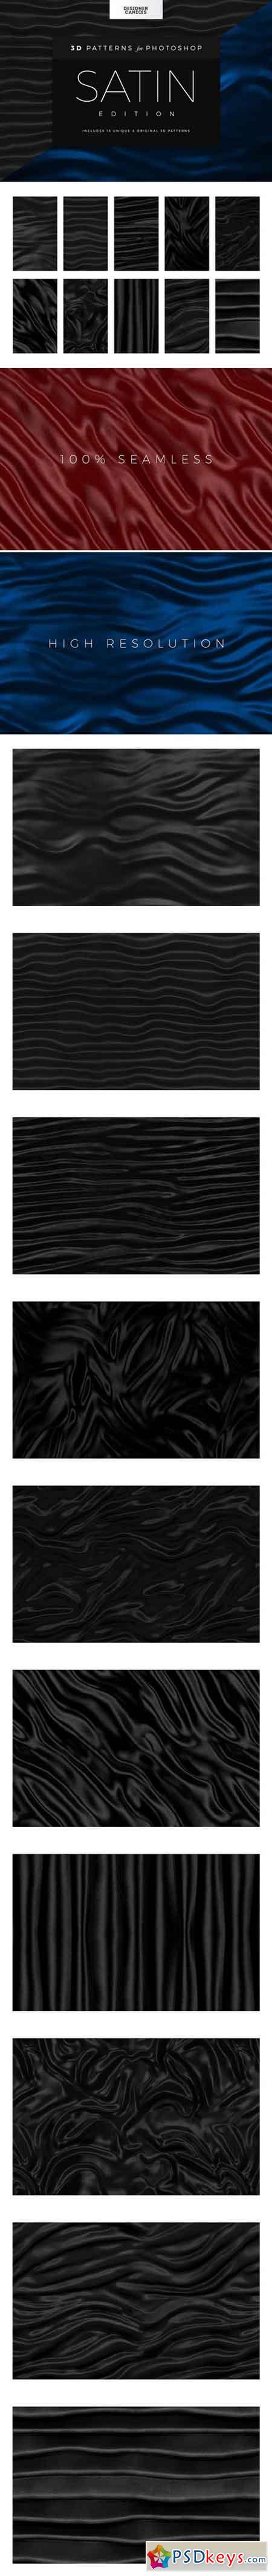 Seamless Silk Satin Fabric Patterns 2004179